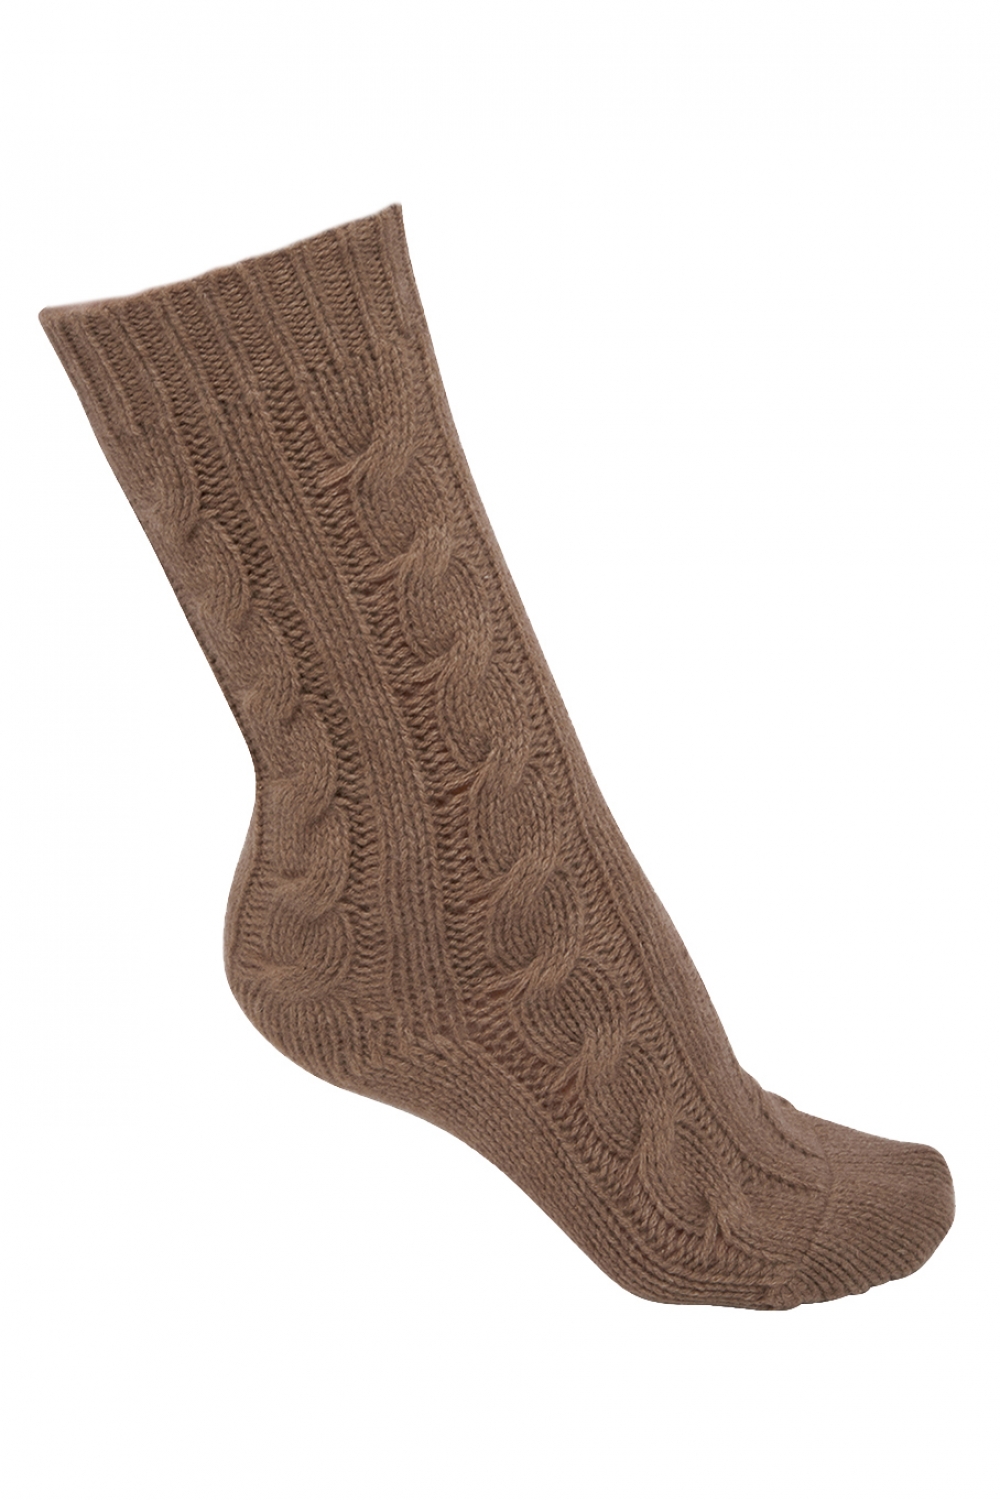 Cashmere accessories socks pedibus natural brown 37 41